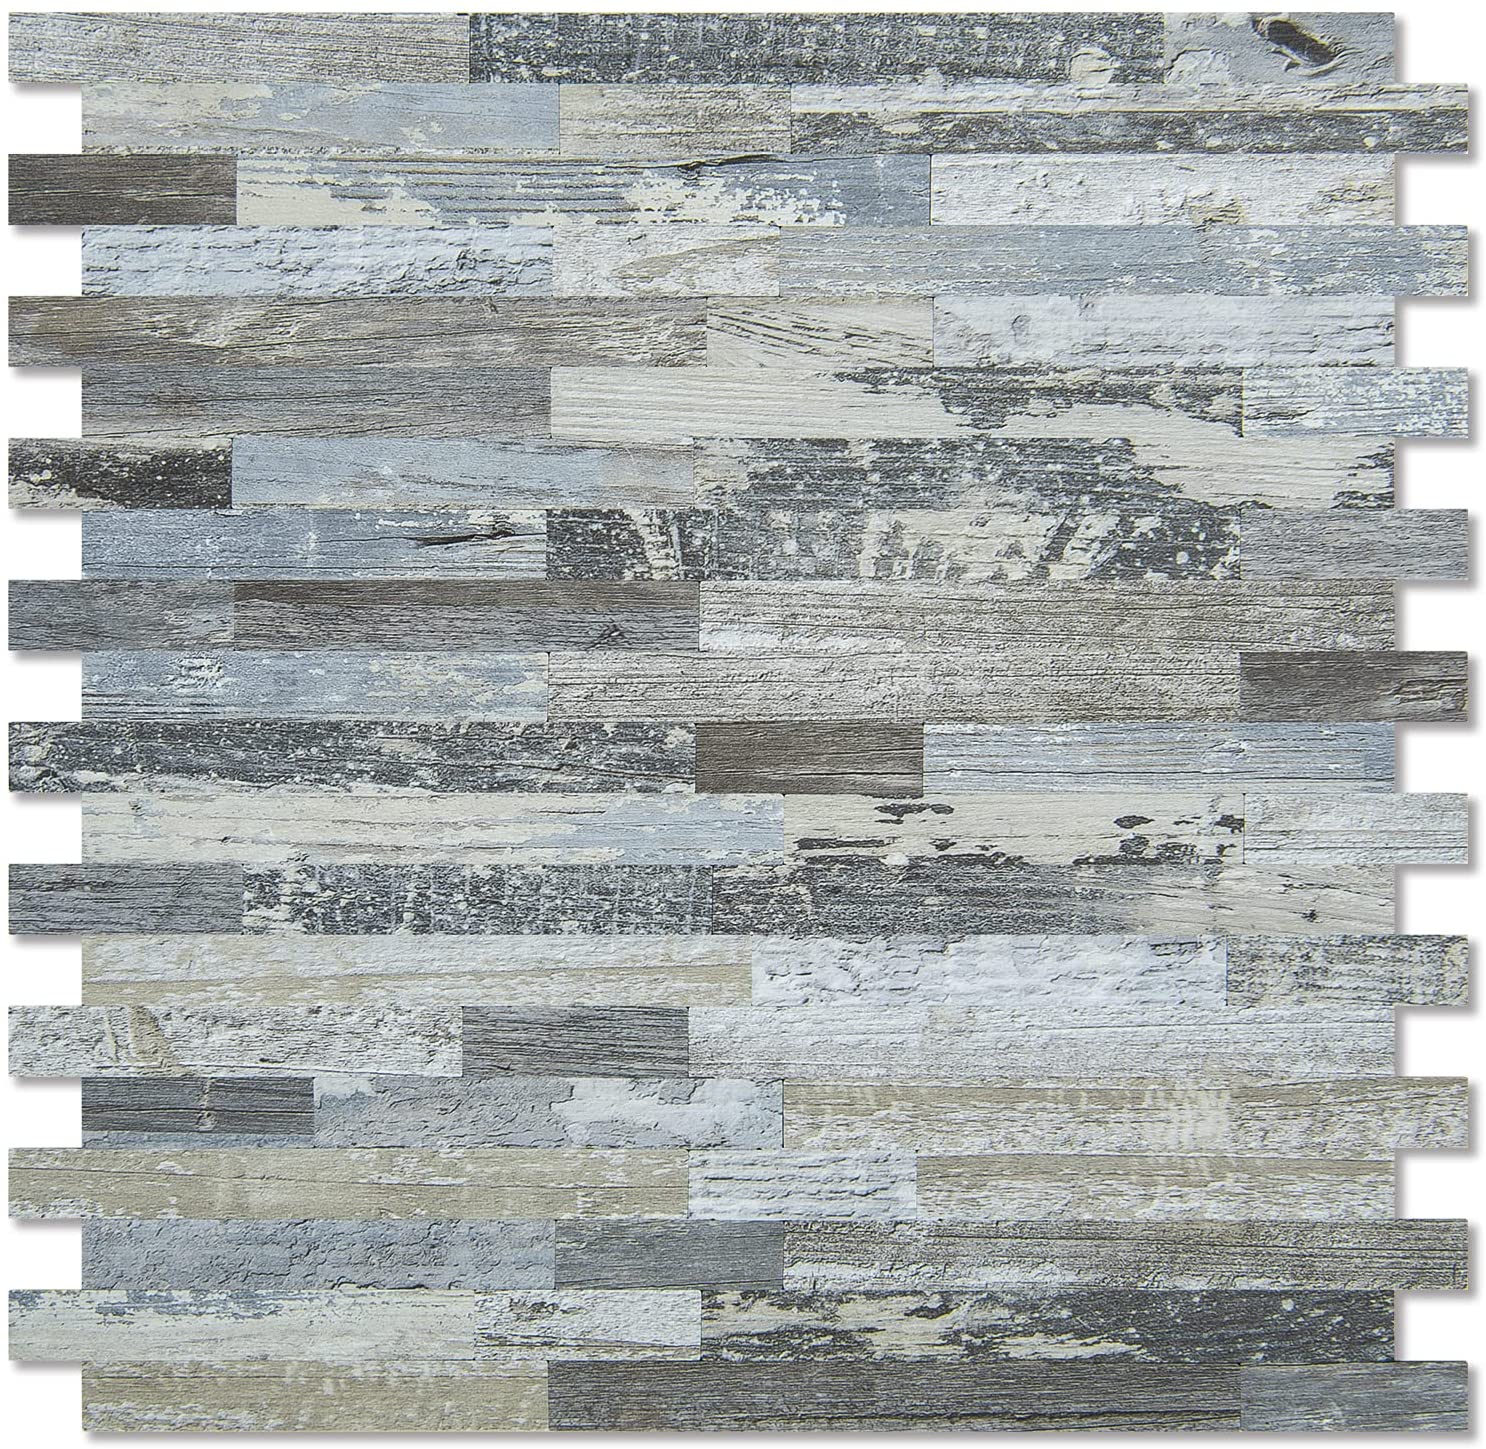 A16616-Art3d 10-Sheet Peel and Stick Stone Backsplash Tile for Kitchen, Bathroom - Volakas White Embellished with Metal Silver